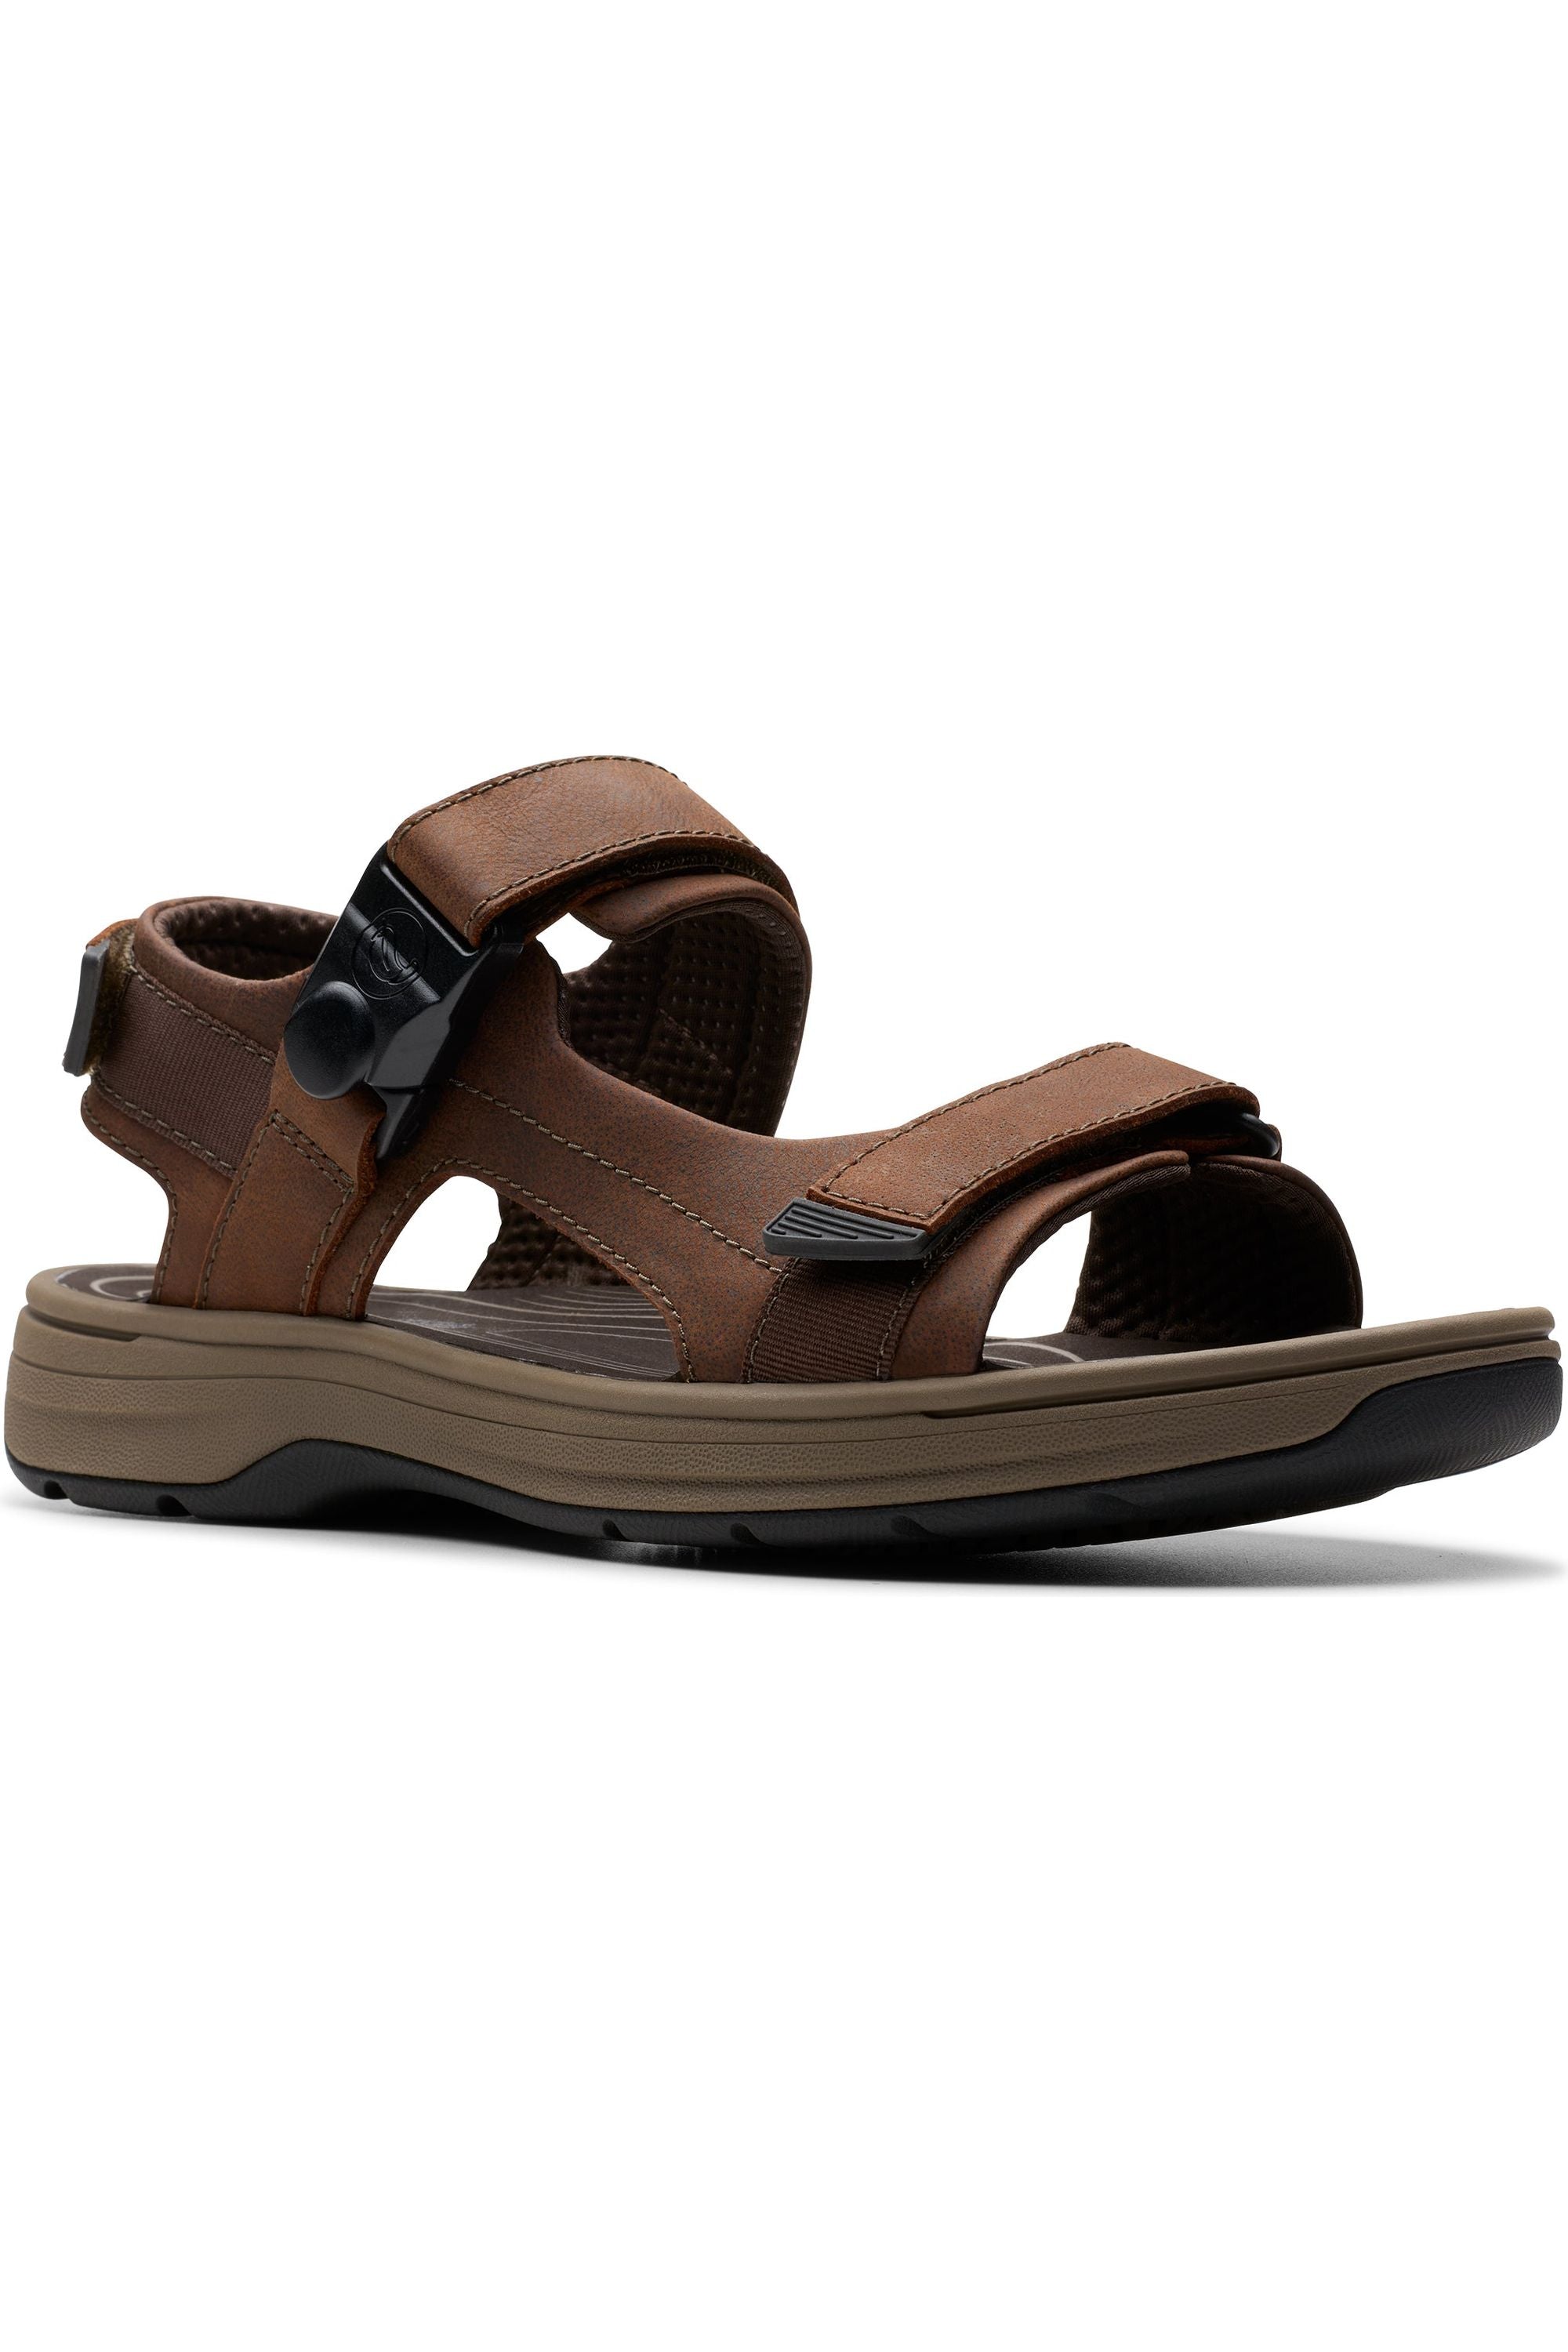 Clarks Saltway Trail sandal in dark brown leather